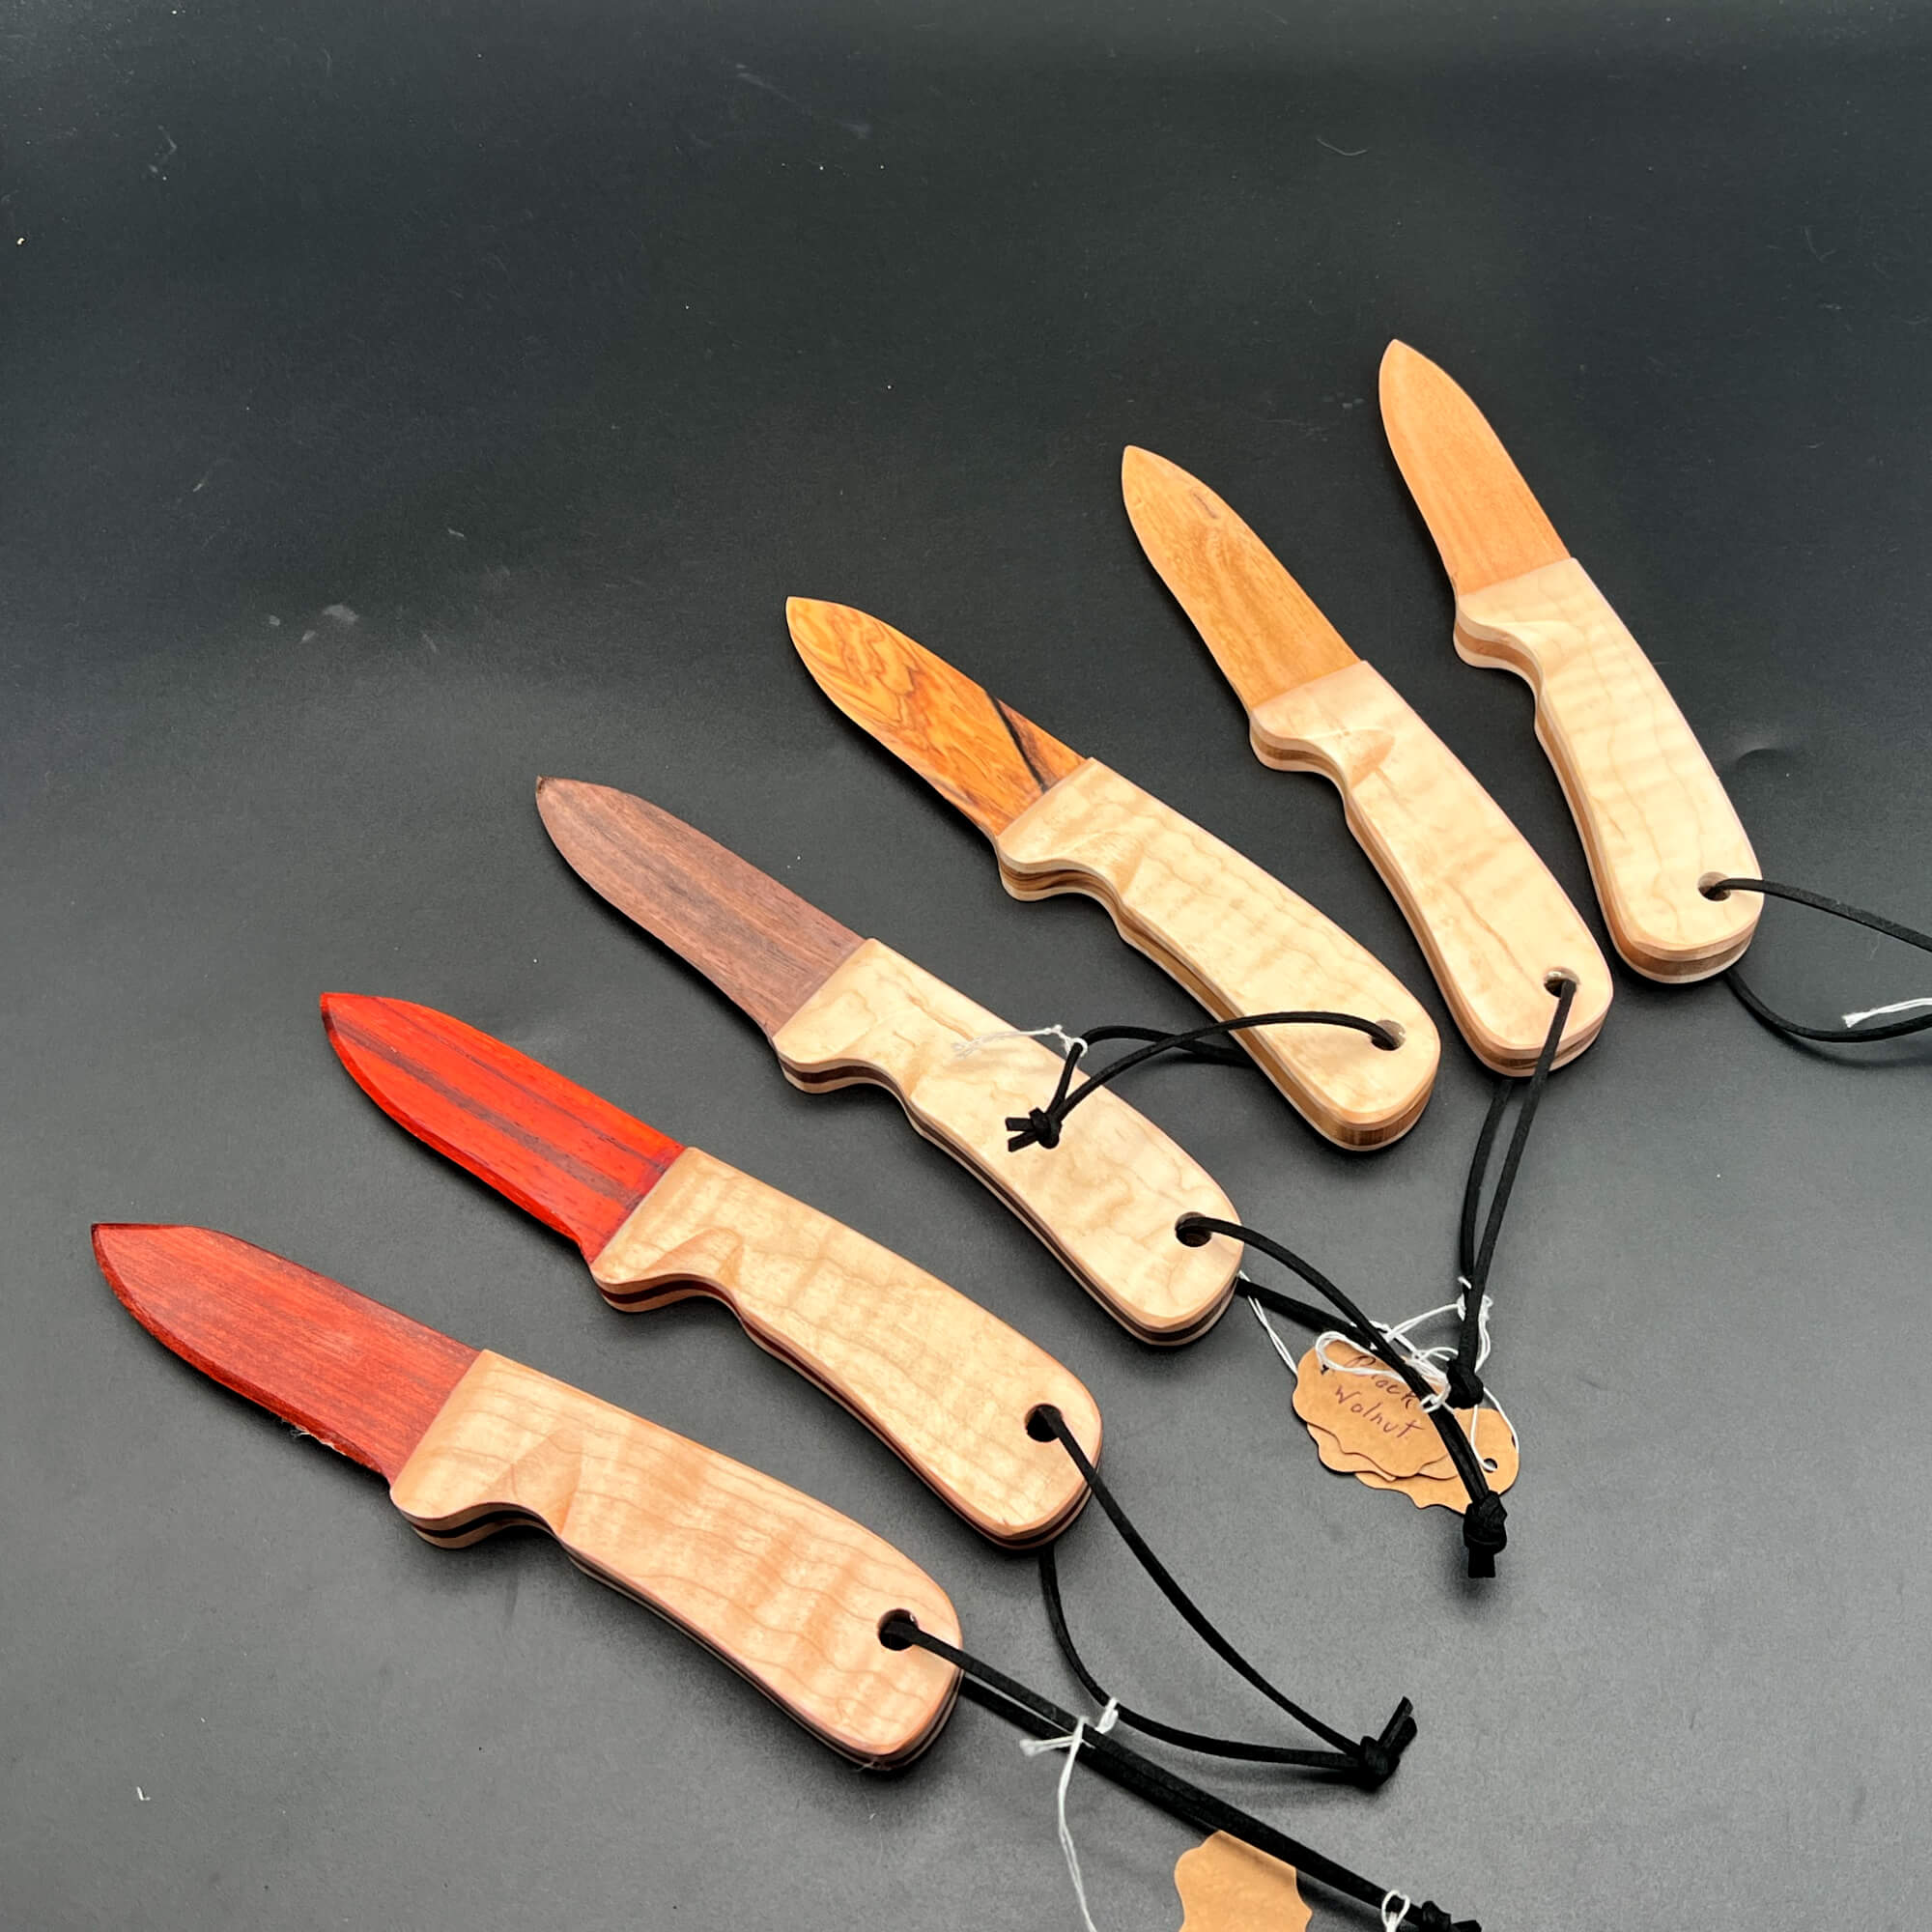 https://thekinkery.com/wp-content/uploads/2022/09/Wooden-Knives-1.jpg